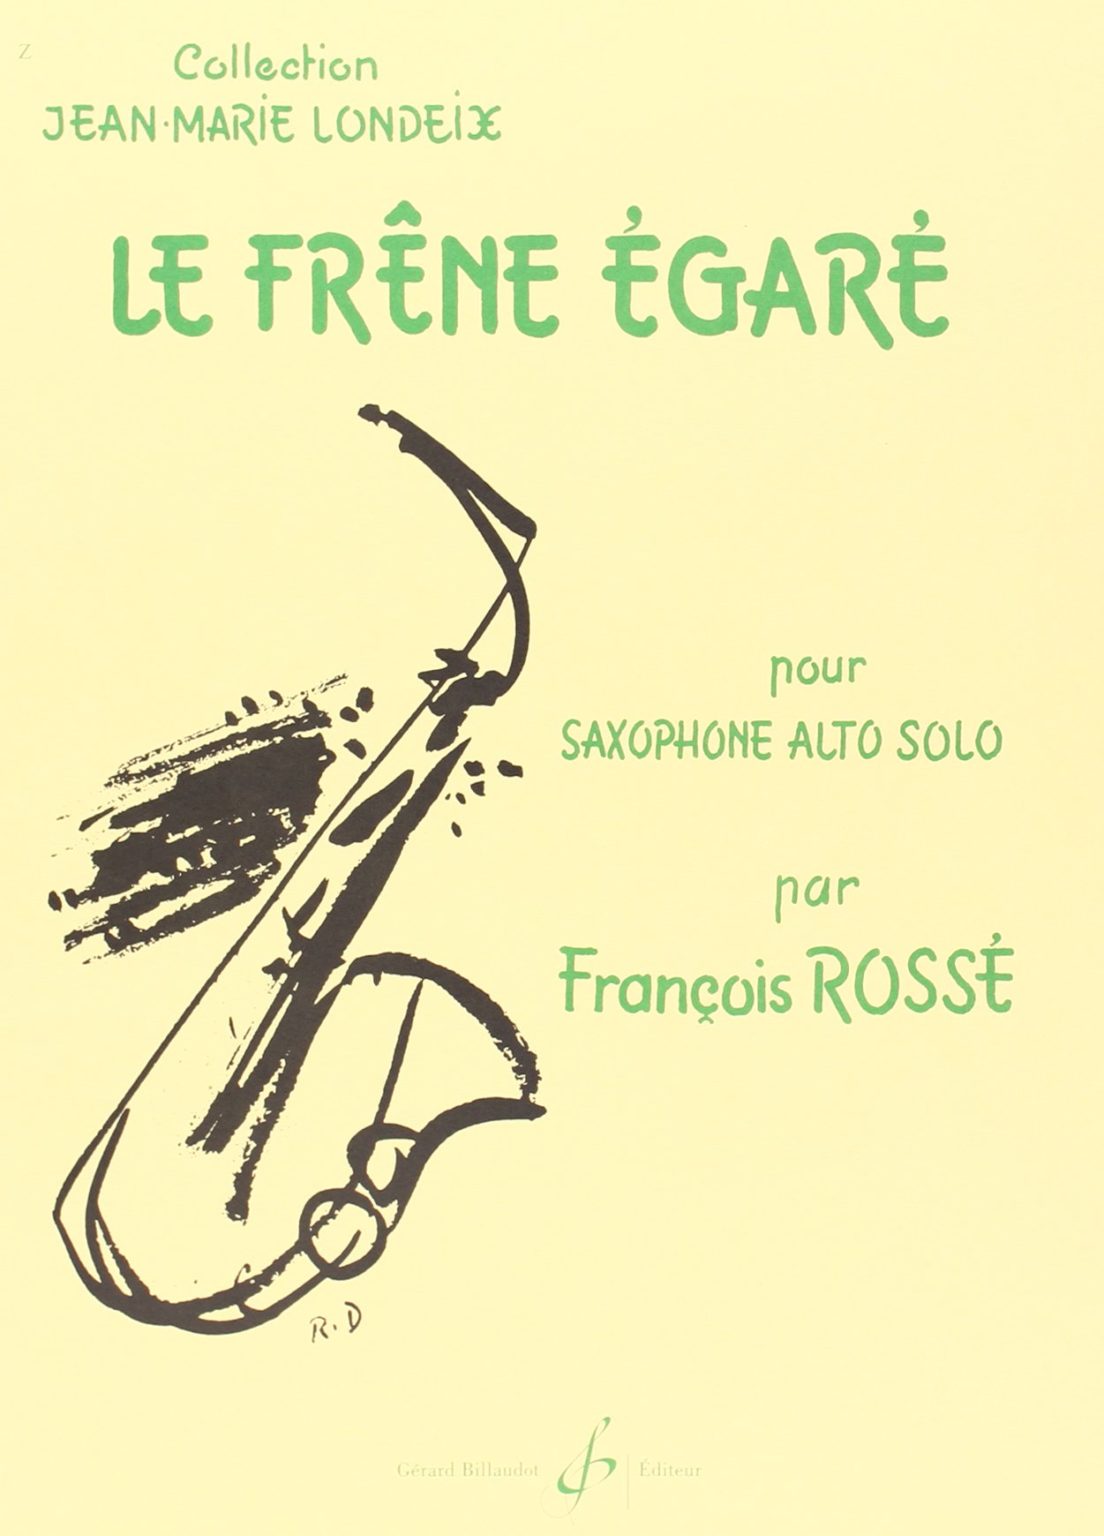 Le Frene Egare (1978/79) para saxófono alto solo. Francois Rosse